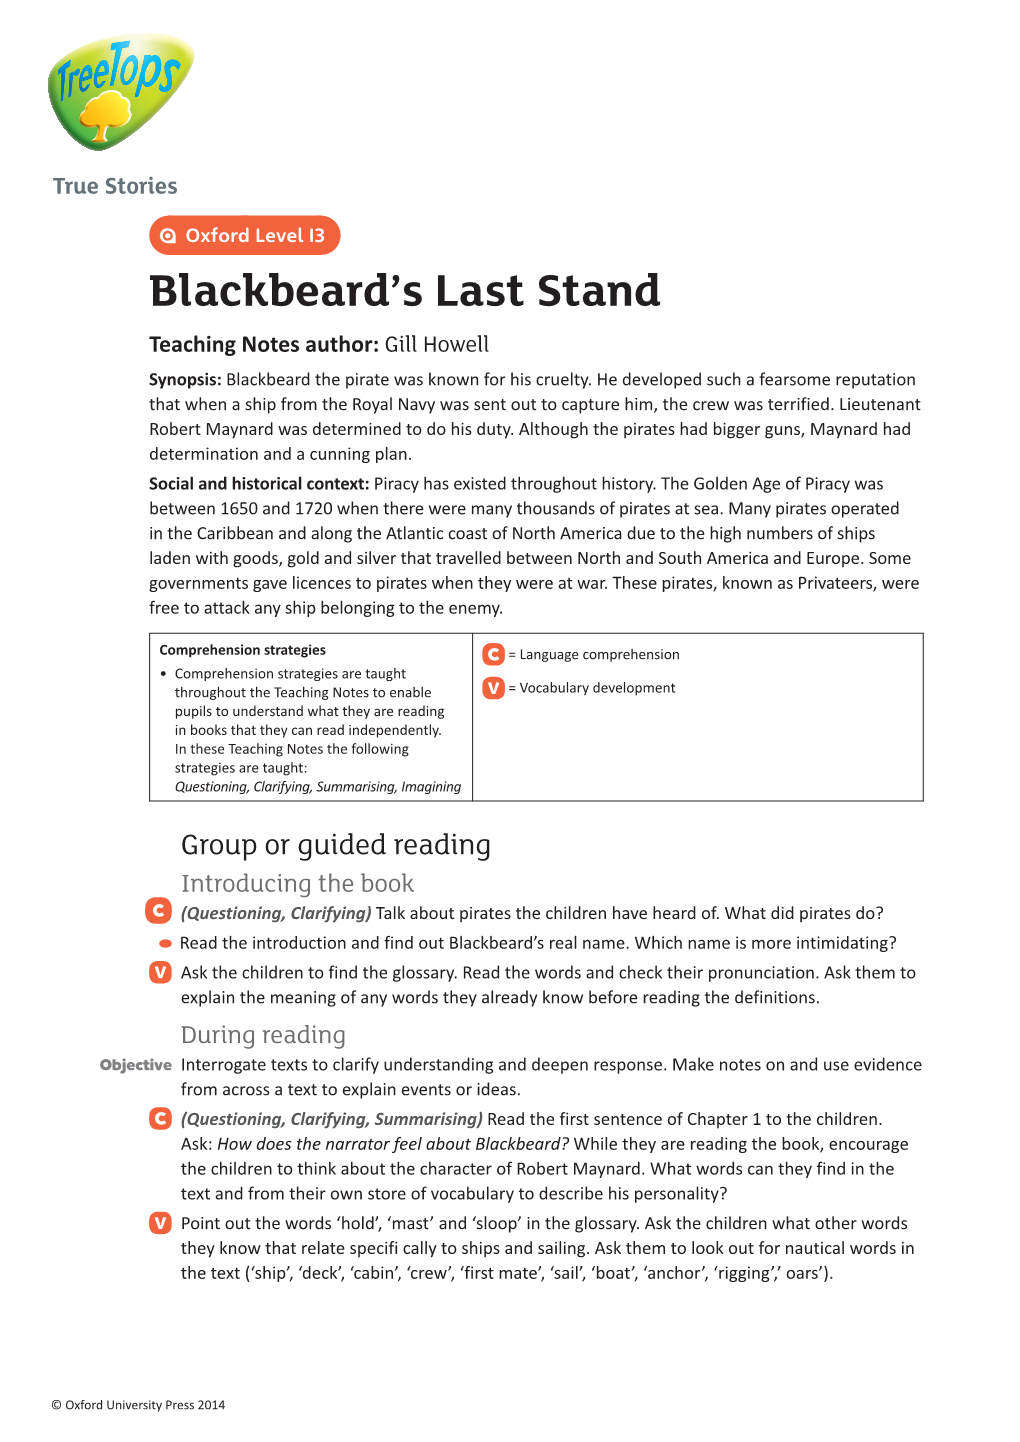 Blackbeard's Last Stand